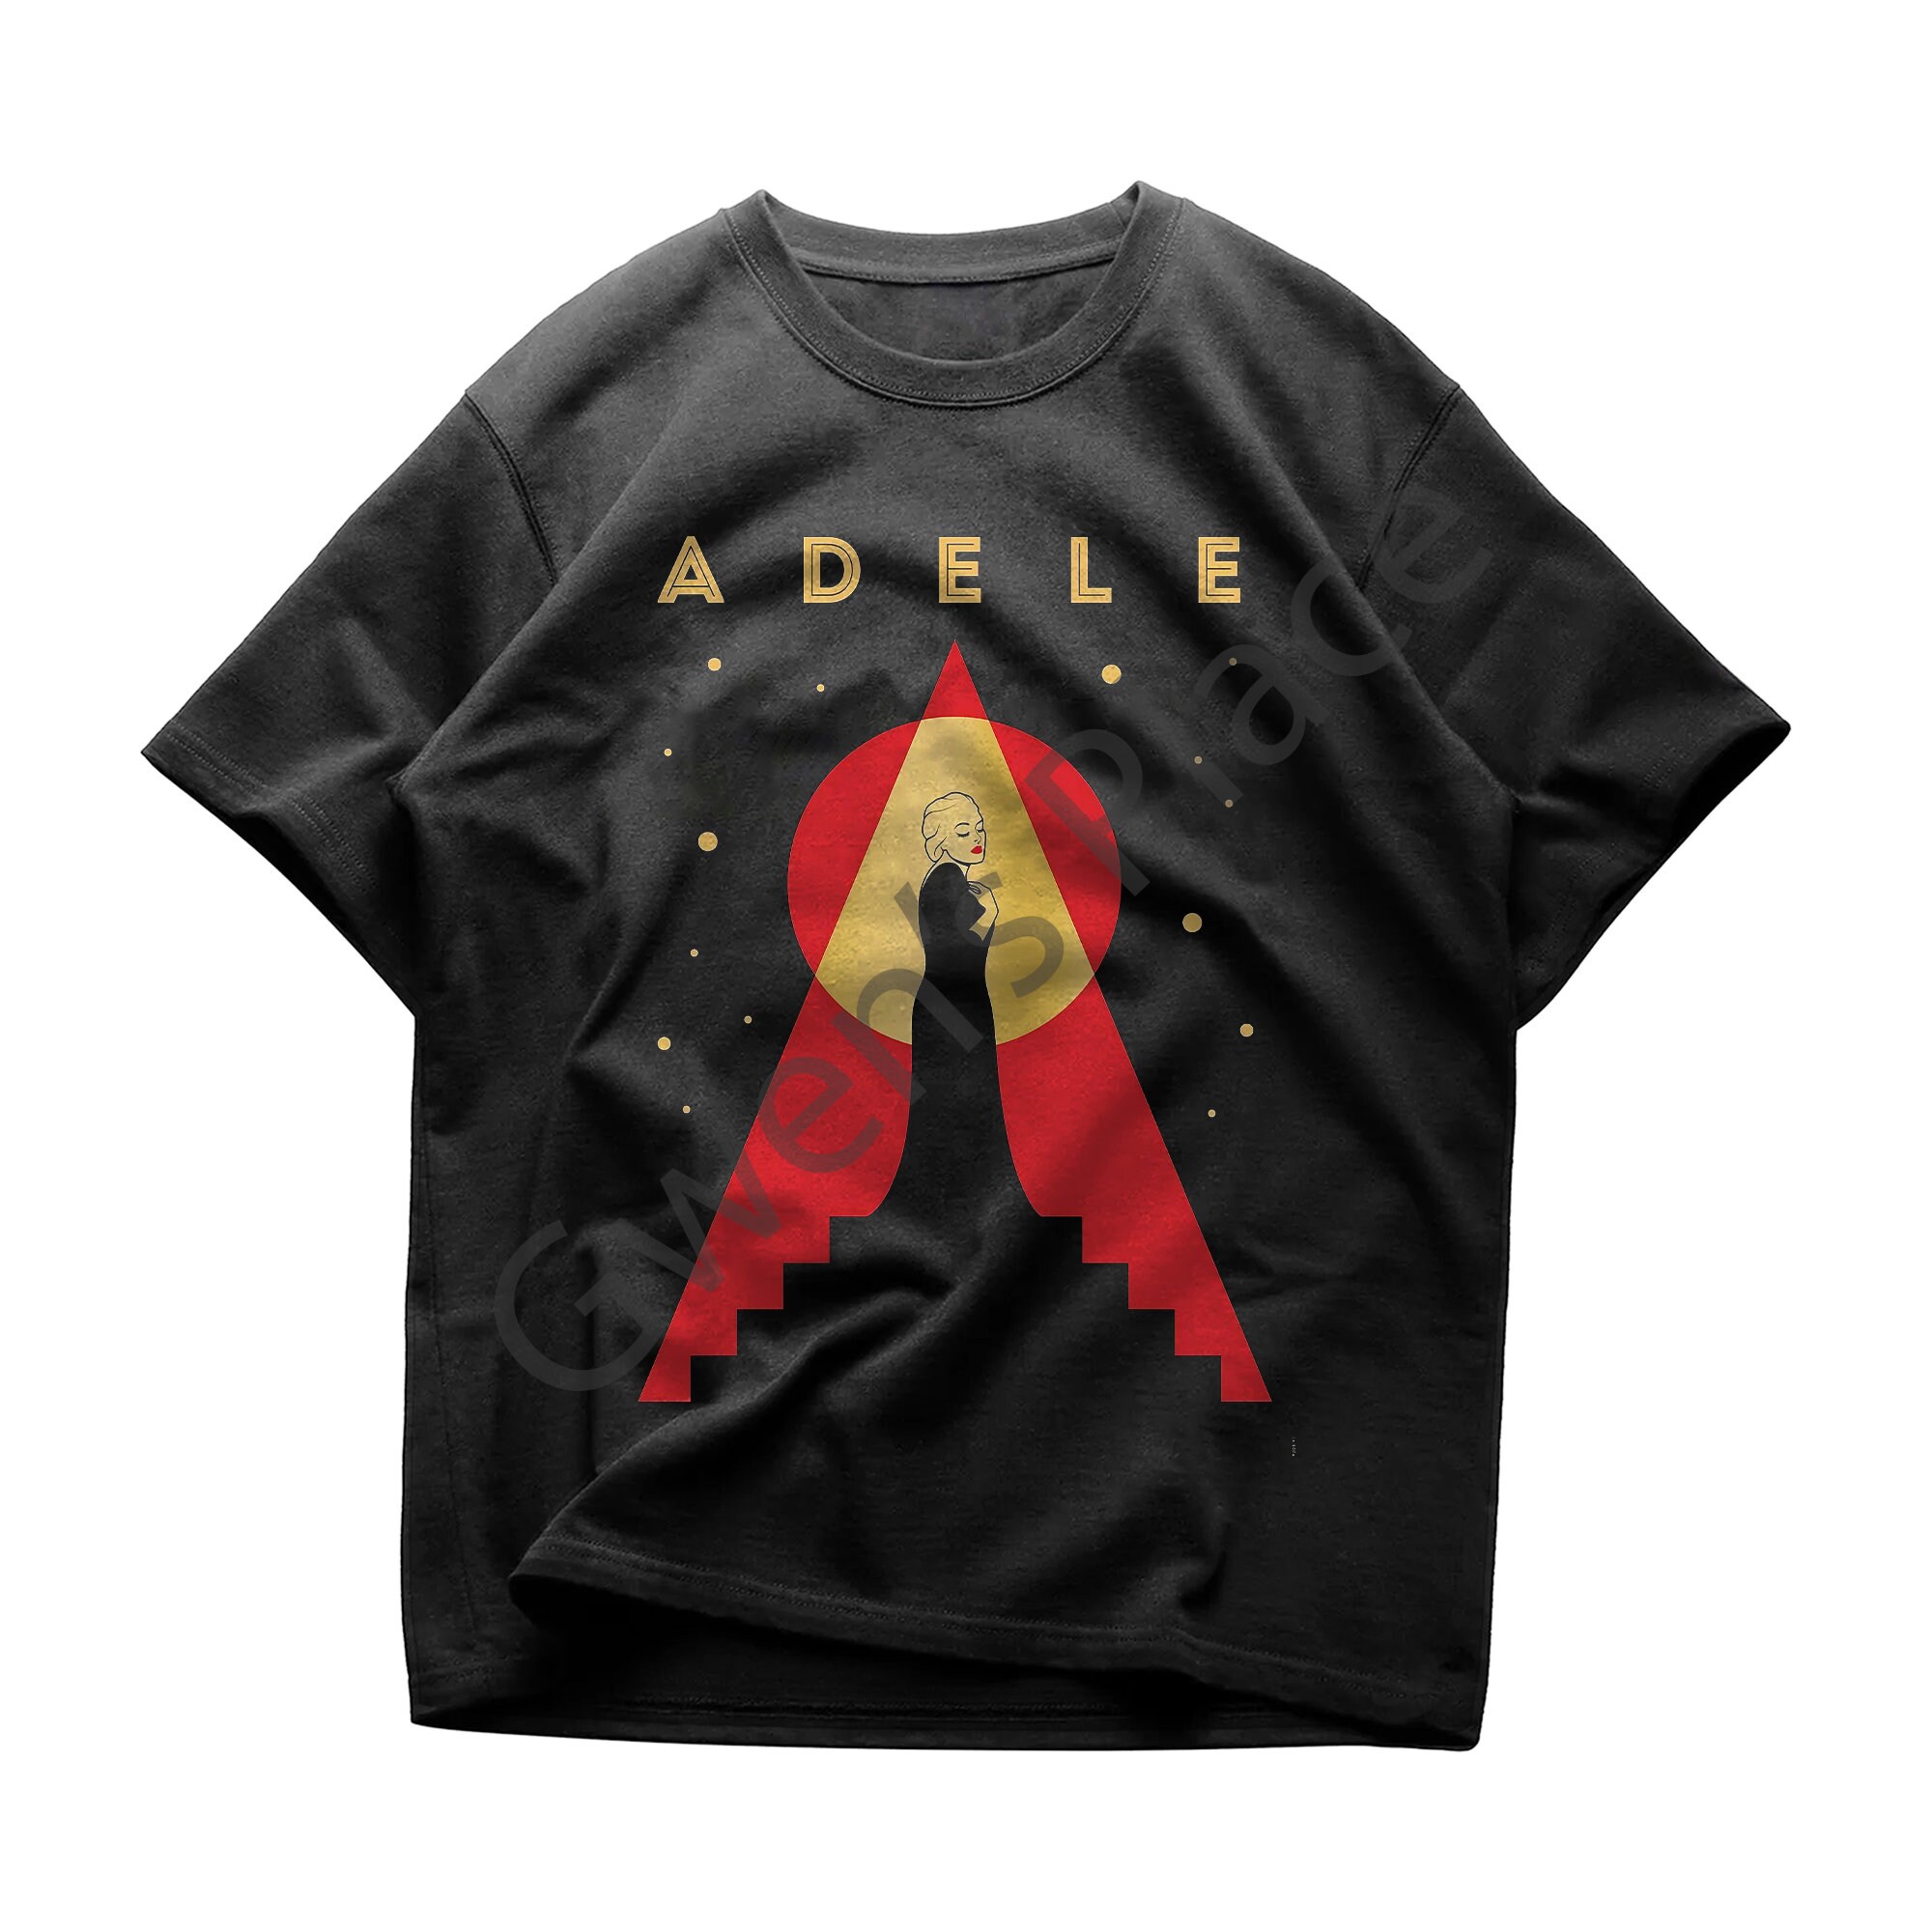 Adele T-Shirt - Pop Tee - Someone Like You Shirt - 21 Album